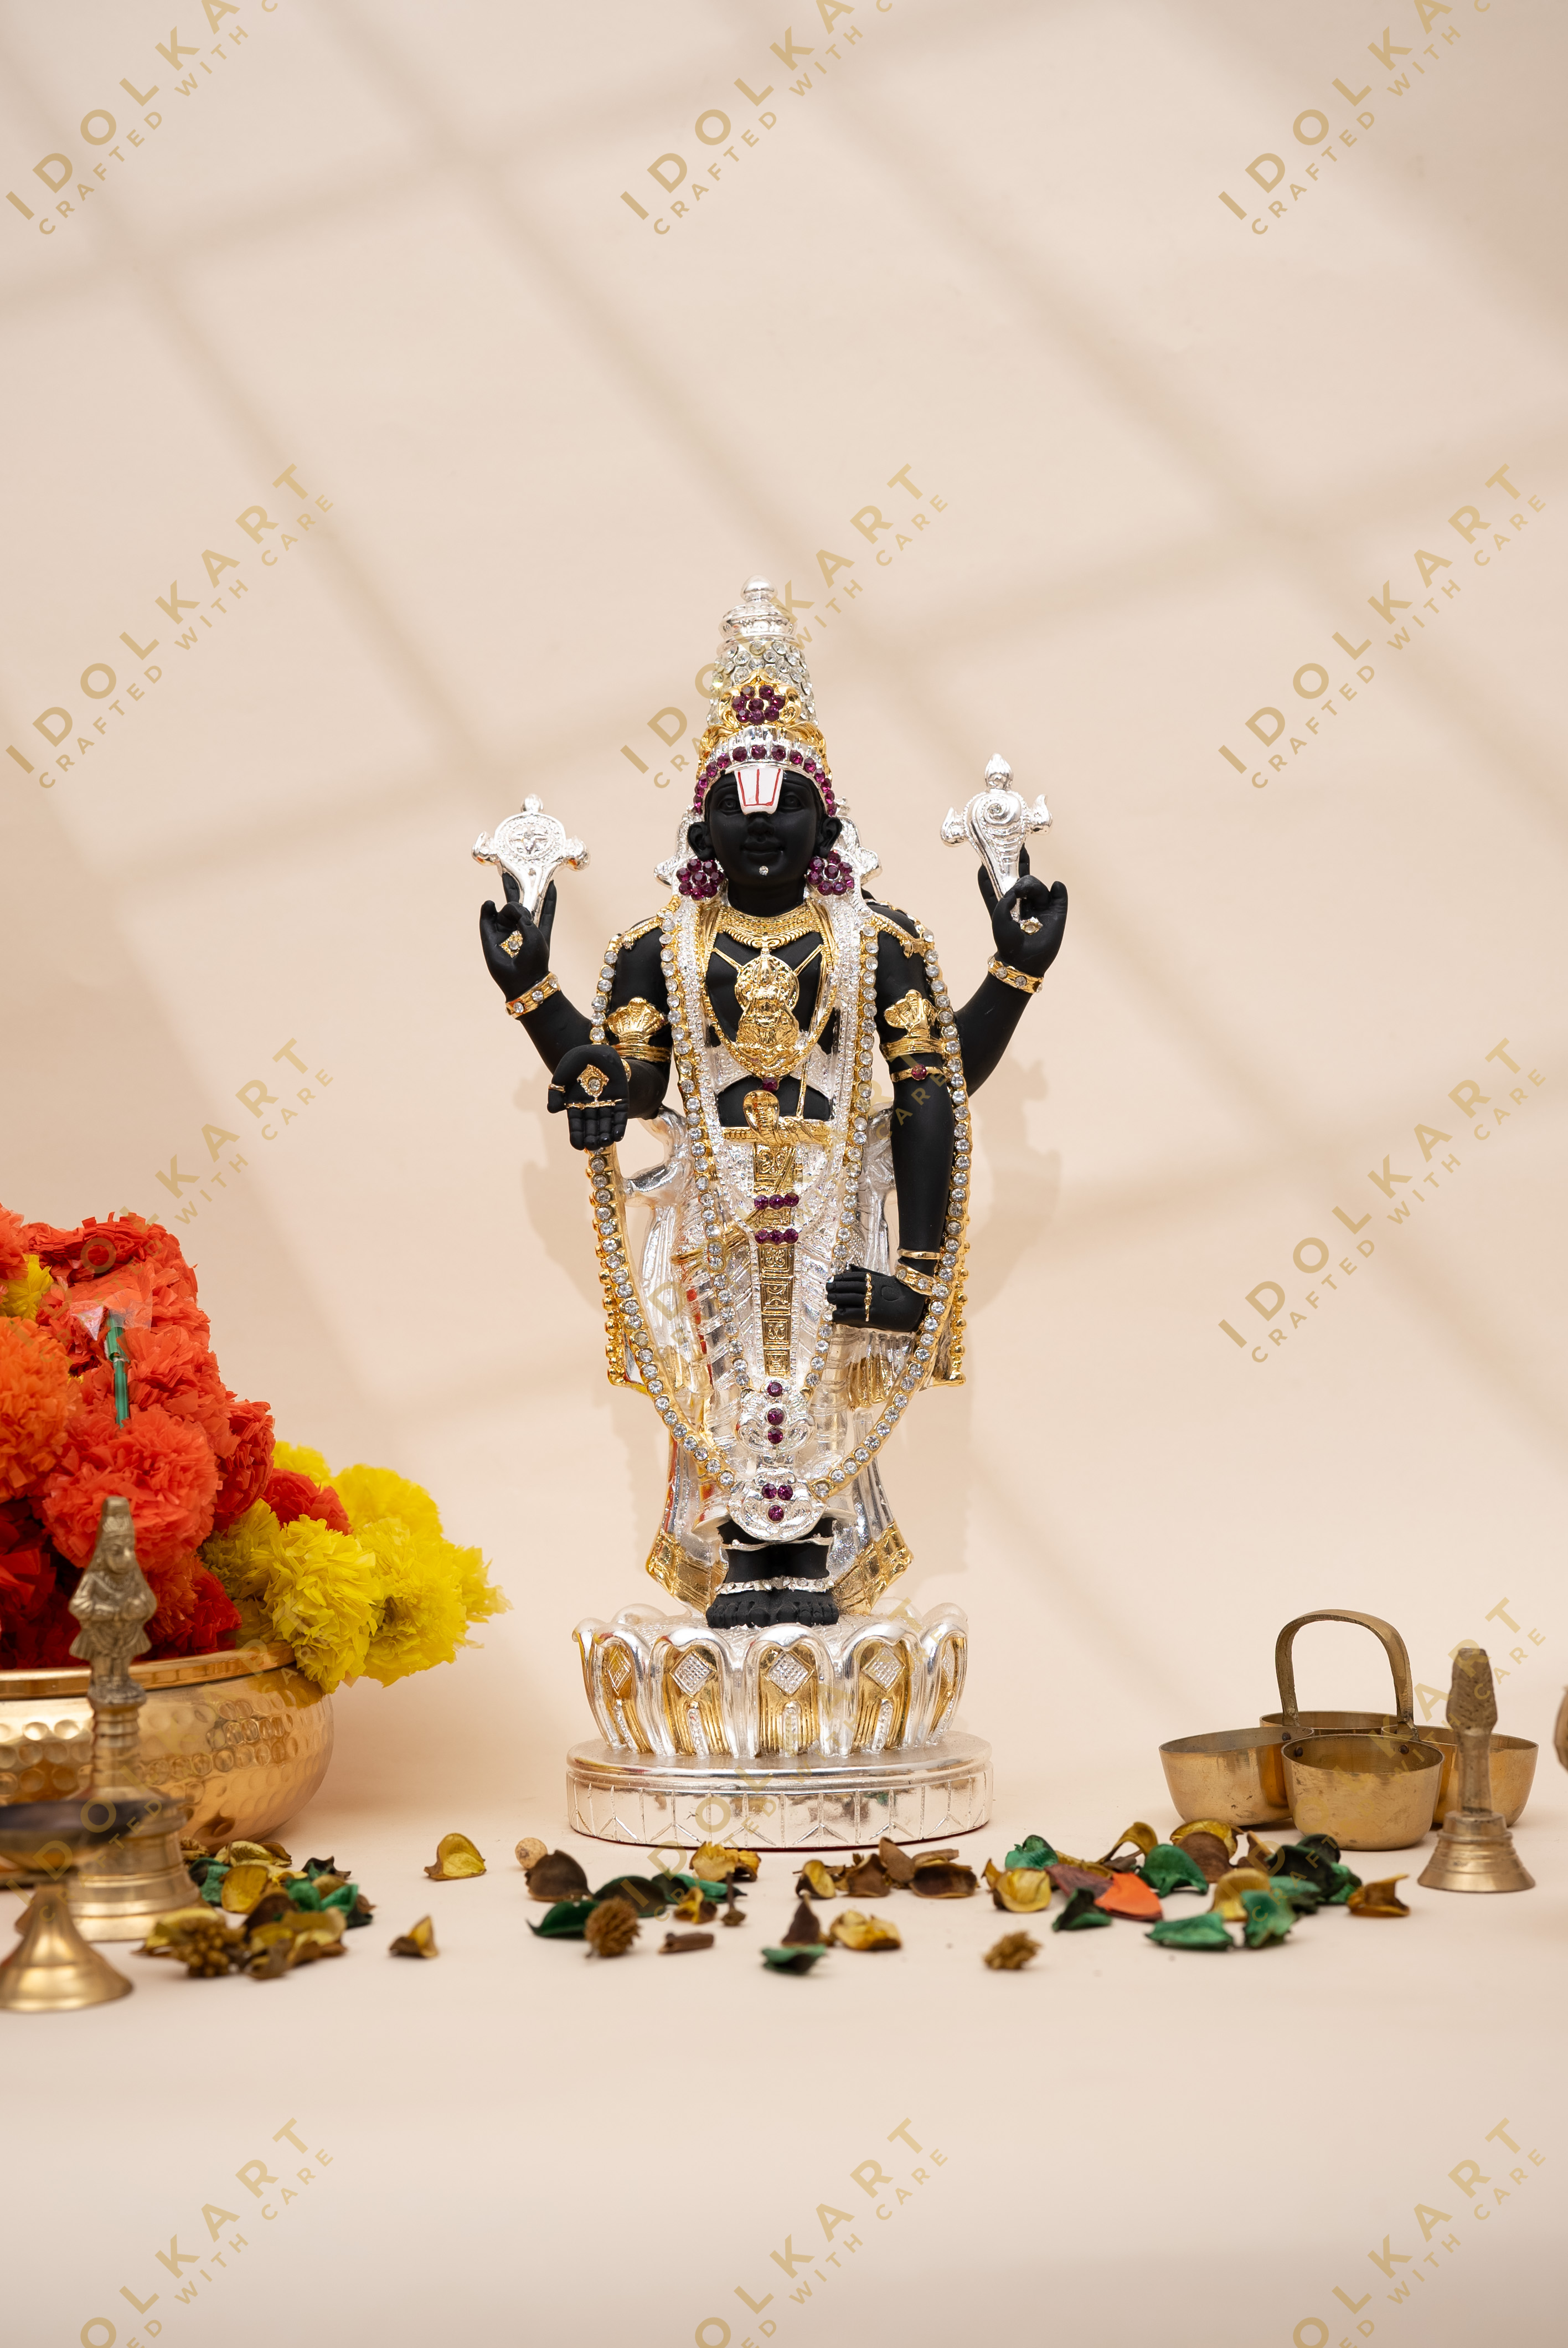 Idolkart Gold and Silver Coated Tirupati Balaji Murti Idol | Lord Venkateswara | Venkateshwara Swamy Idol | Murti for Mandir Temple | Statue for Home Decor